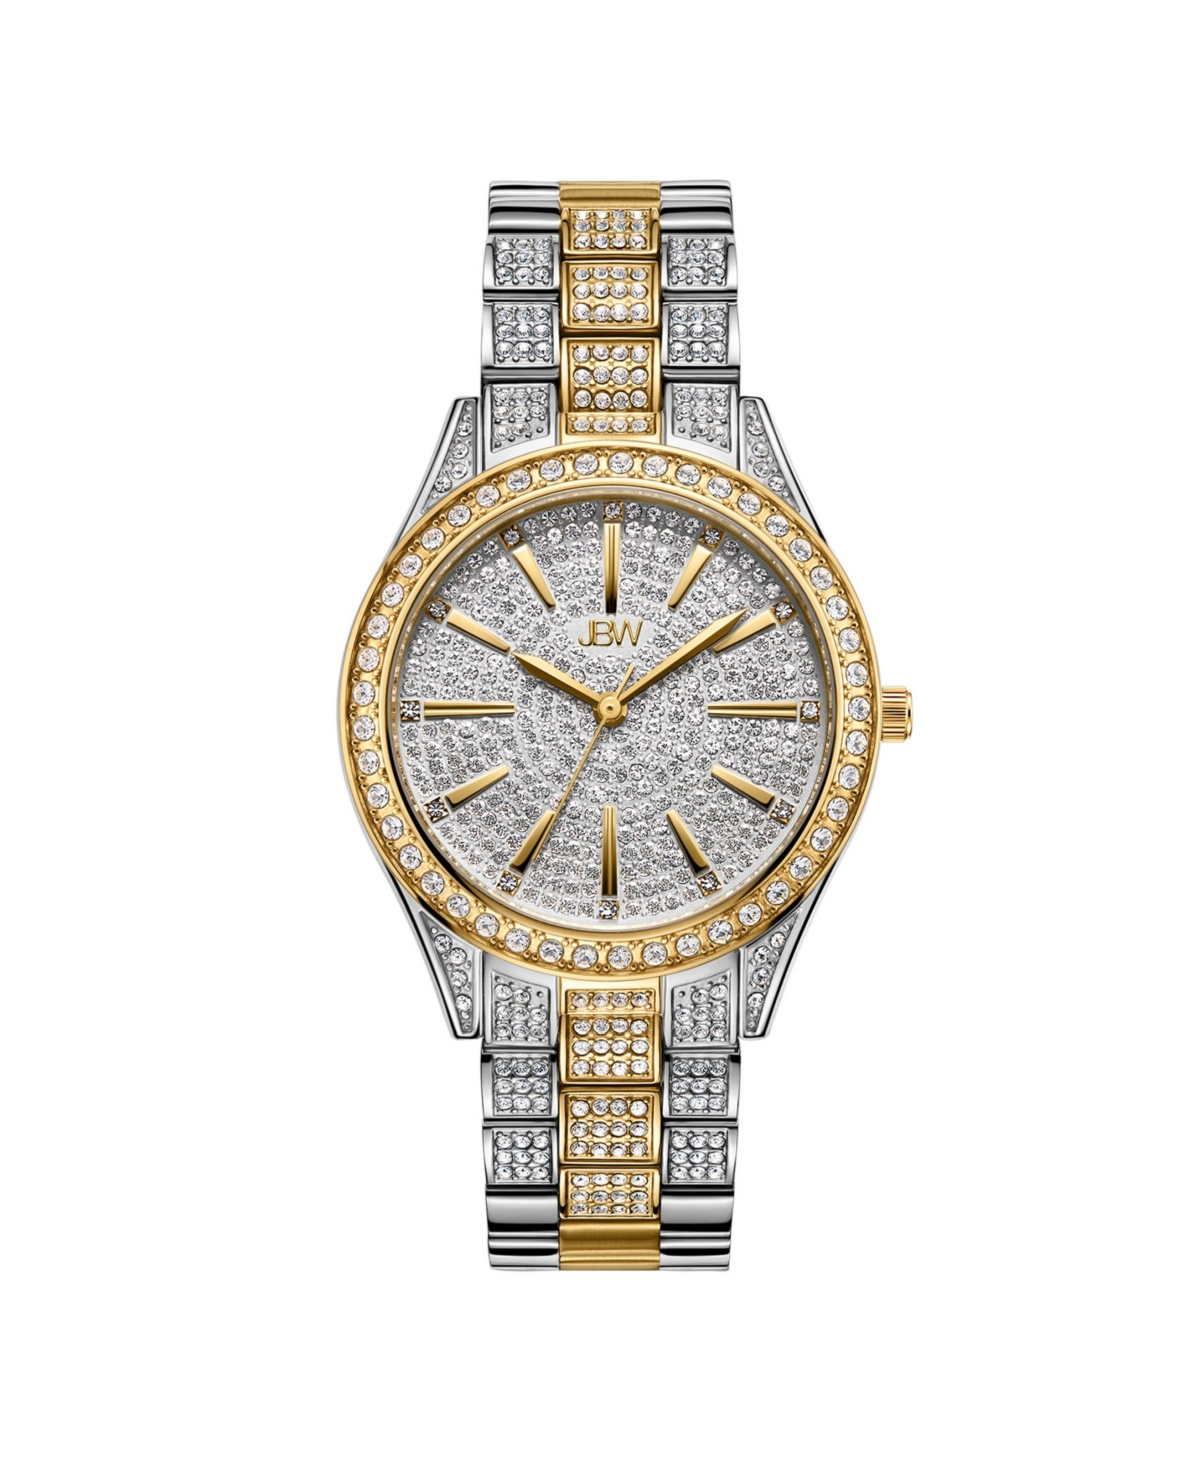 Jbw Women's Cristal Diamond (1/8 ct. t.w.) Watch in 18k Gold-plated Two Tone Stainless-steel Watch 38mm